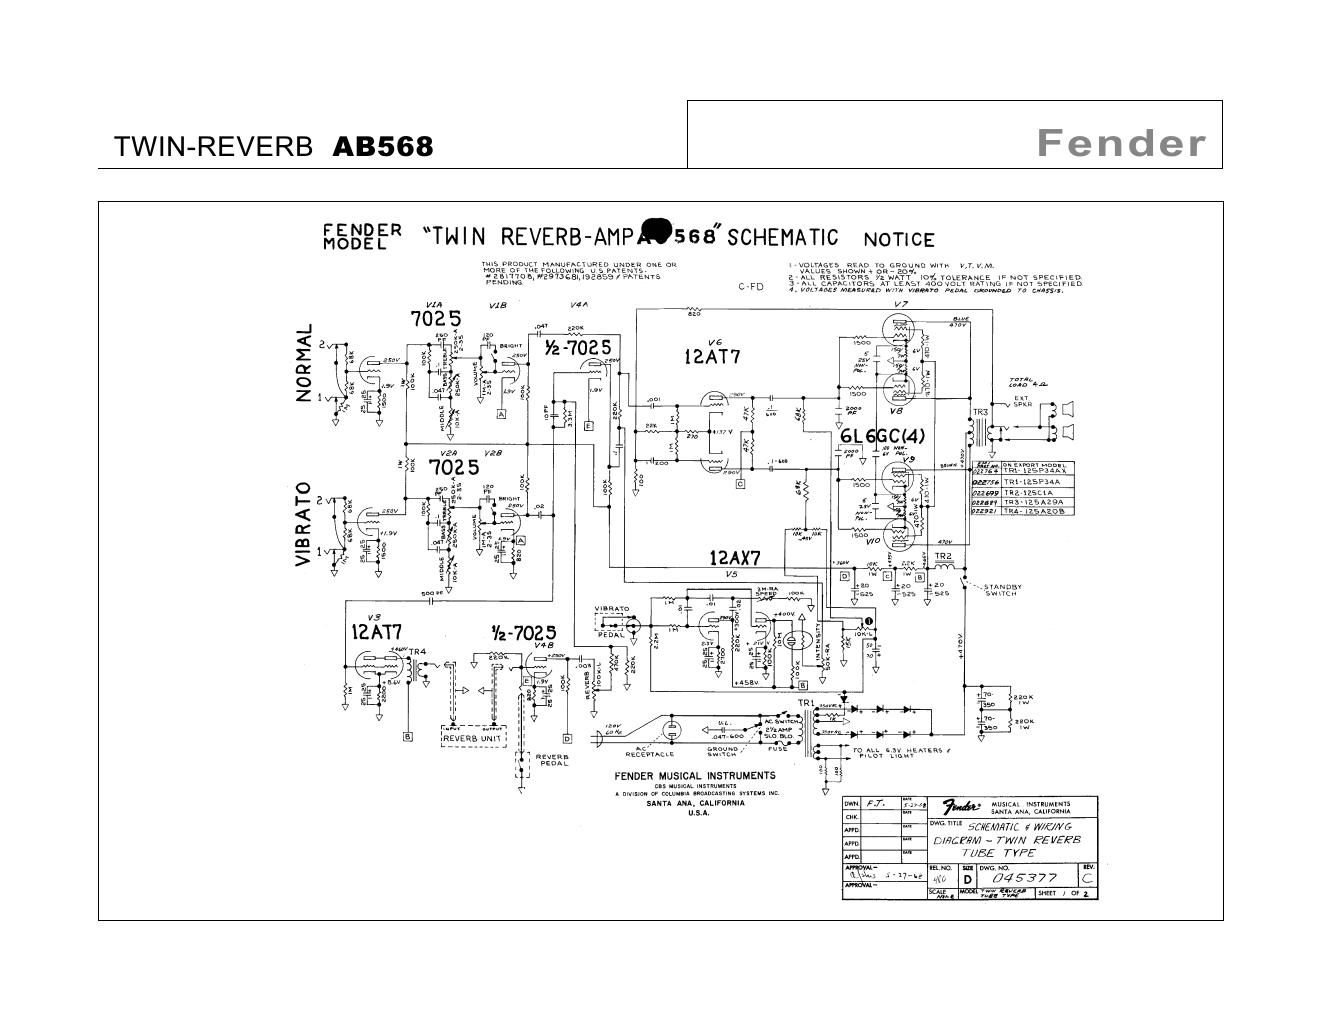 fender twin reverb ab568 schematic